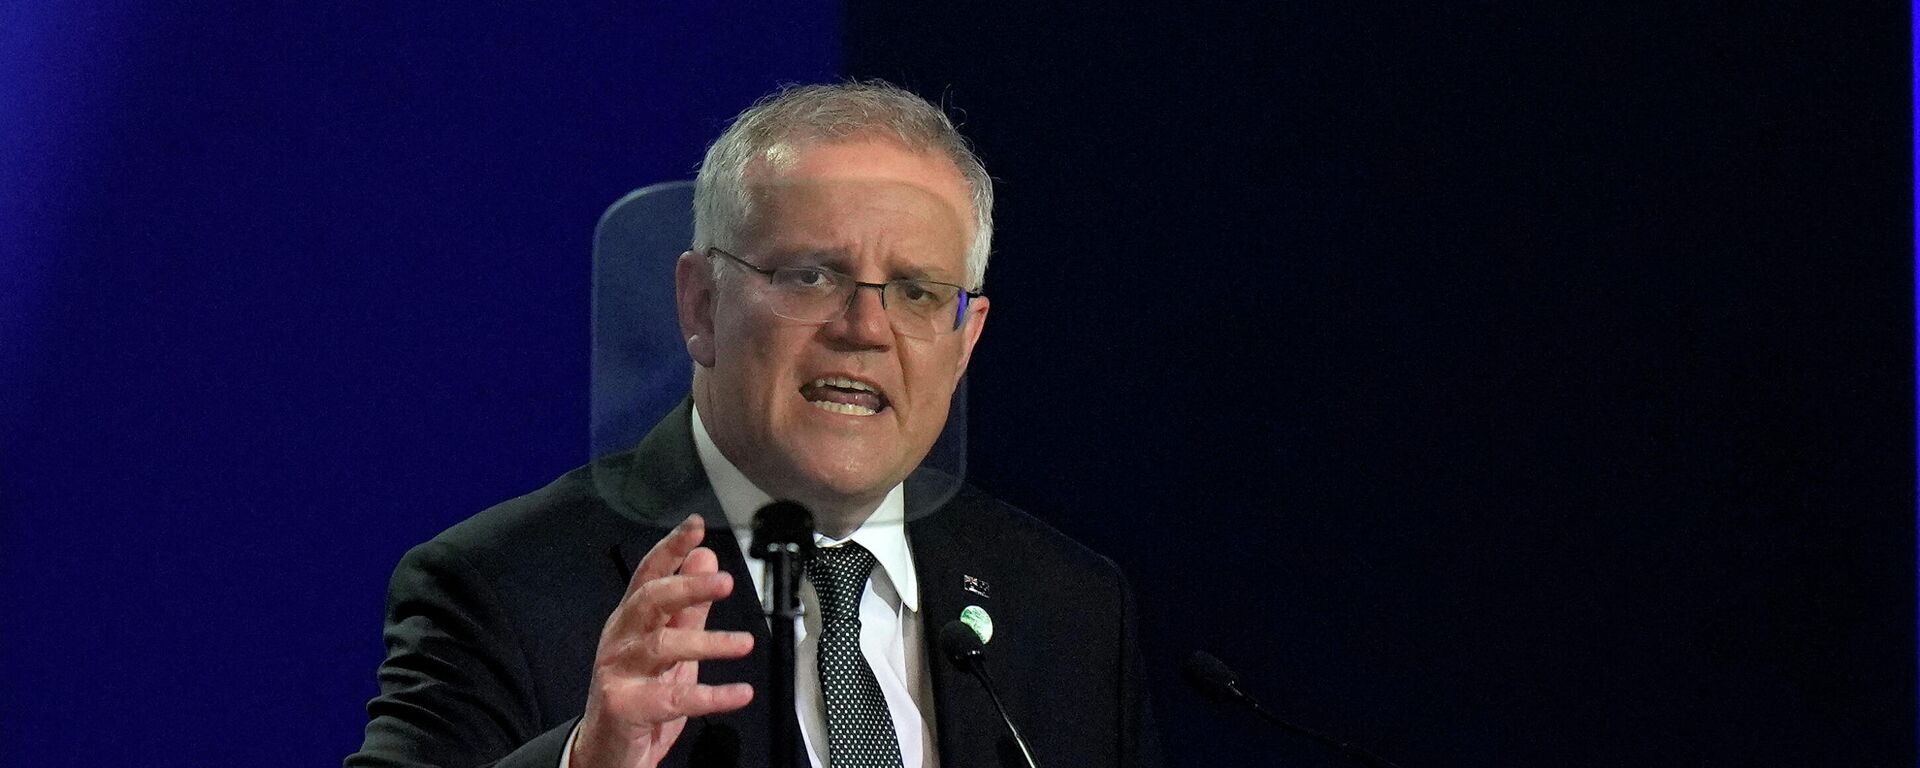 Australia's Prime Minister Scott Morrison gestures as he makes a statement at the UN Climate Change Conference (COP26) in Glasgow, Scotland, Britain November 1, 2021 - Sputnik International, 1920, 23.02.2022